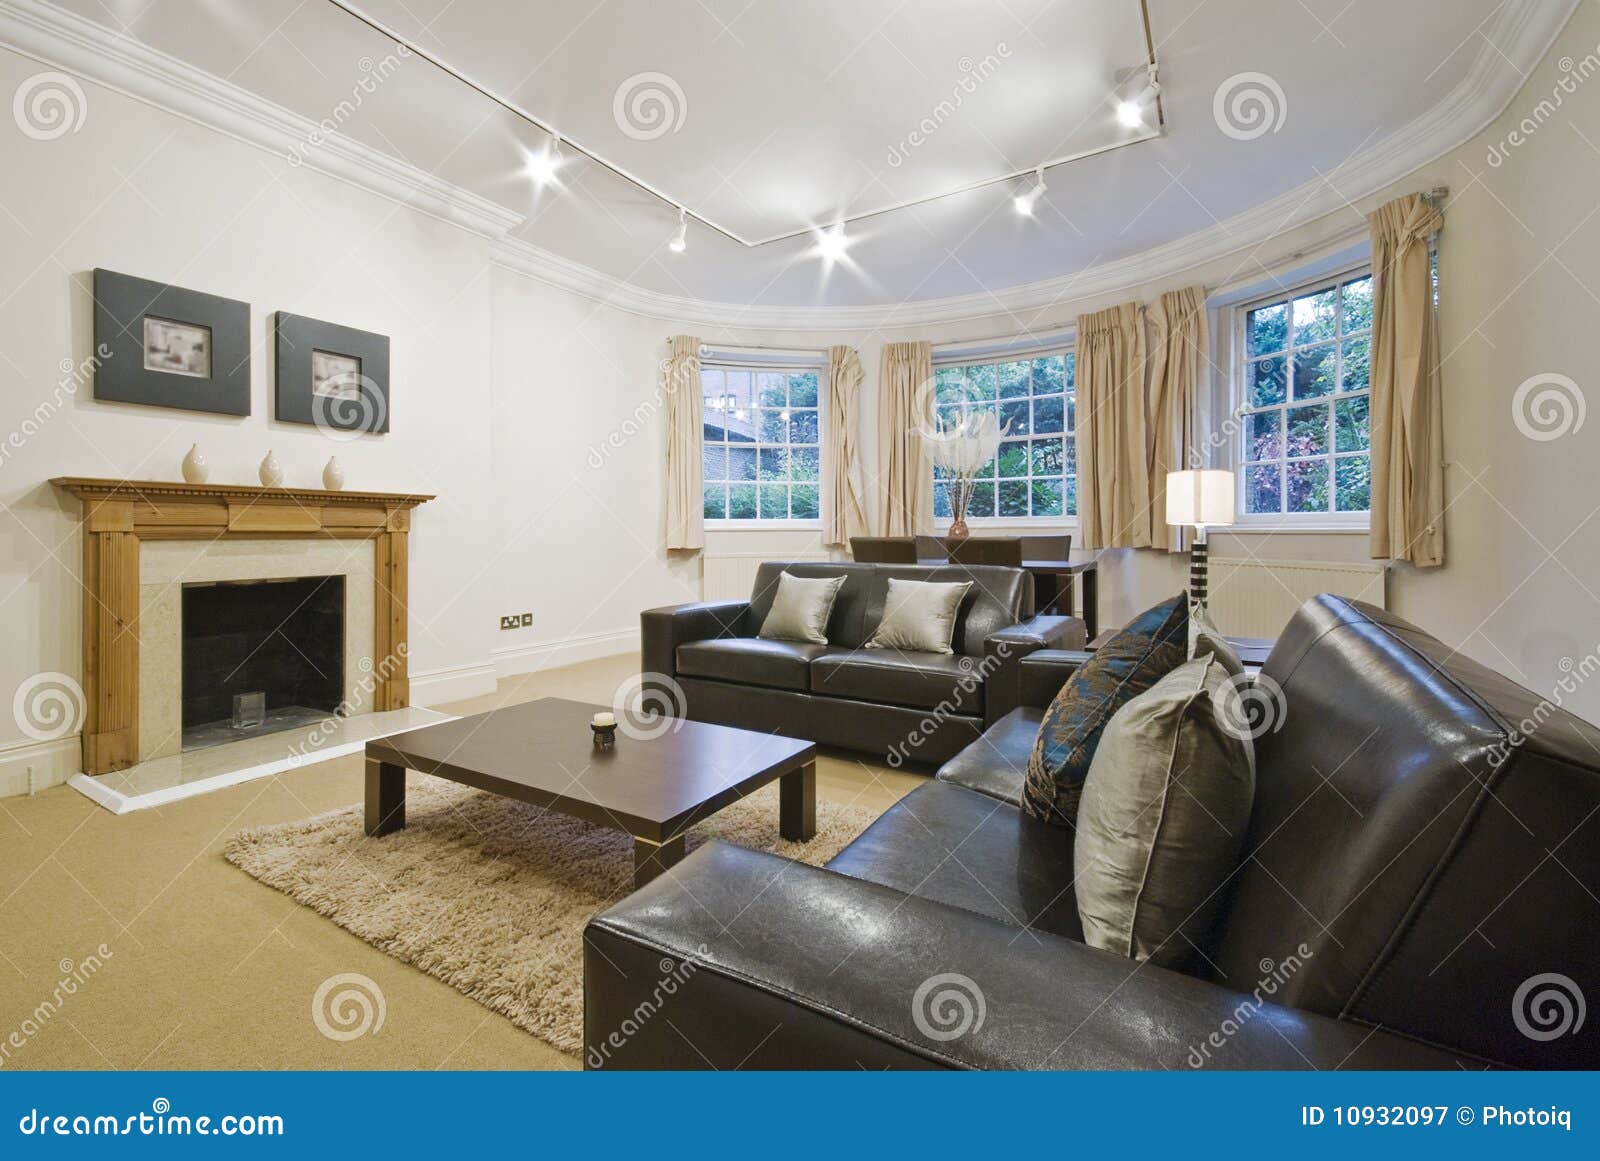 massive living room with bay window